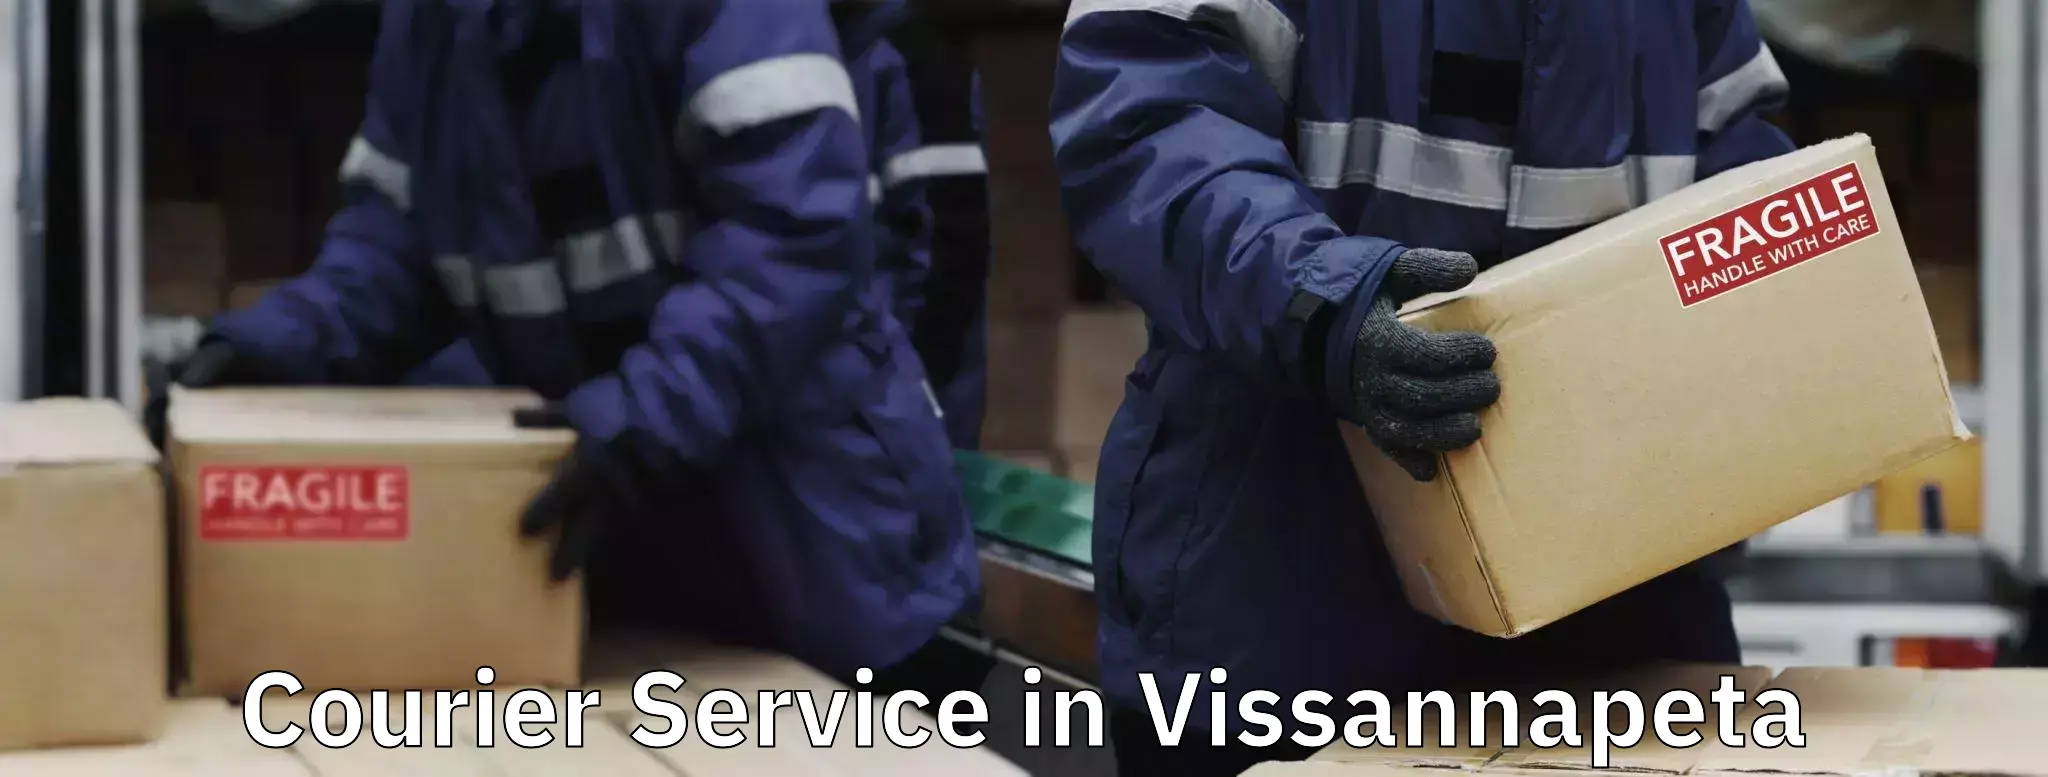 Parcel delivery automation in Vissannapeta